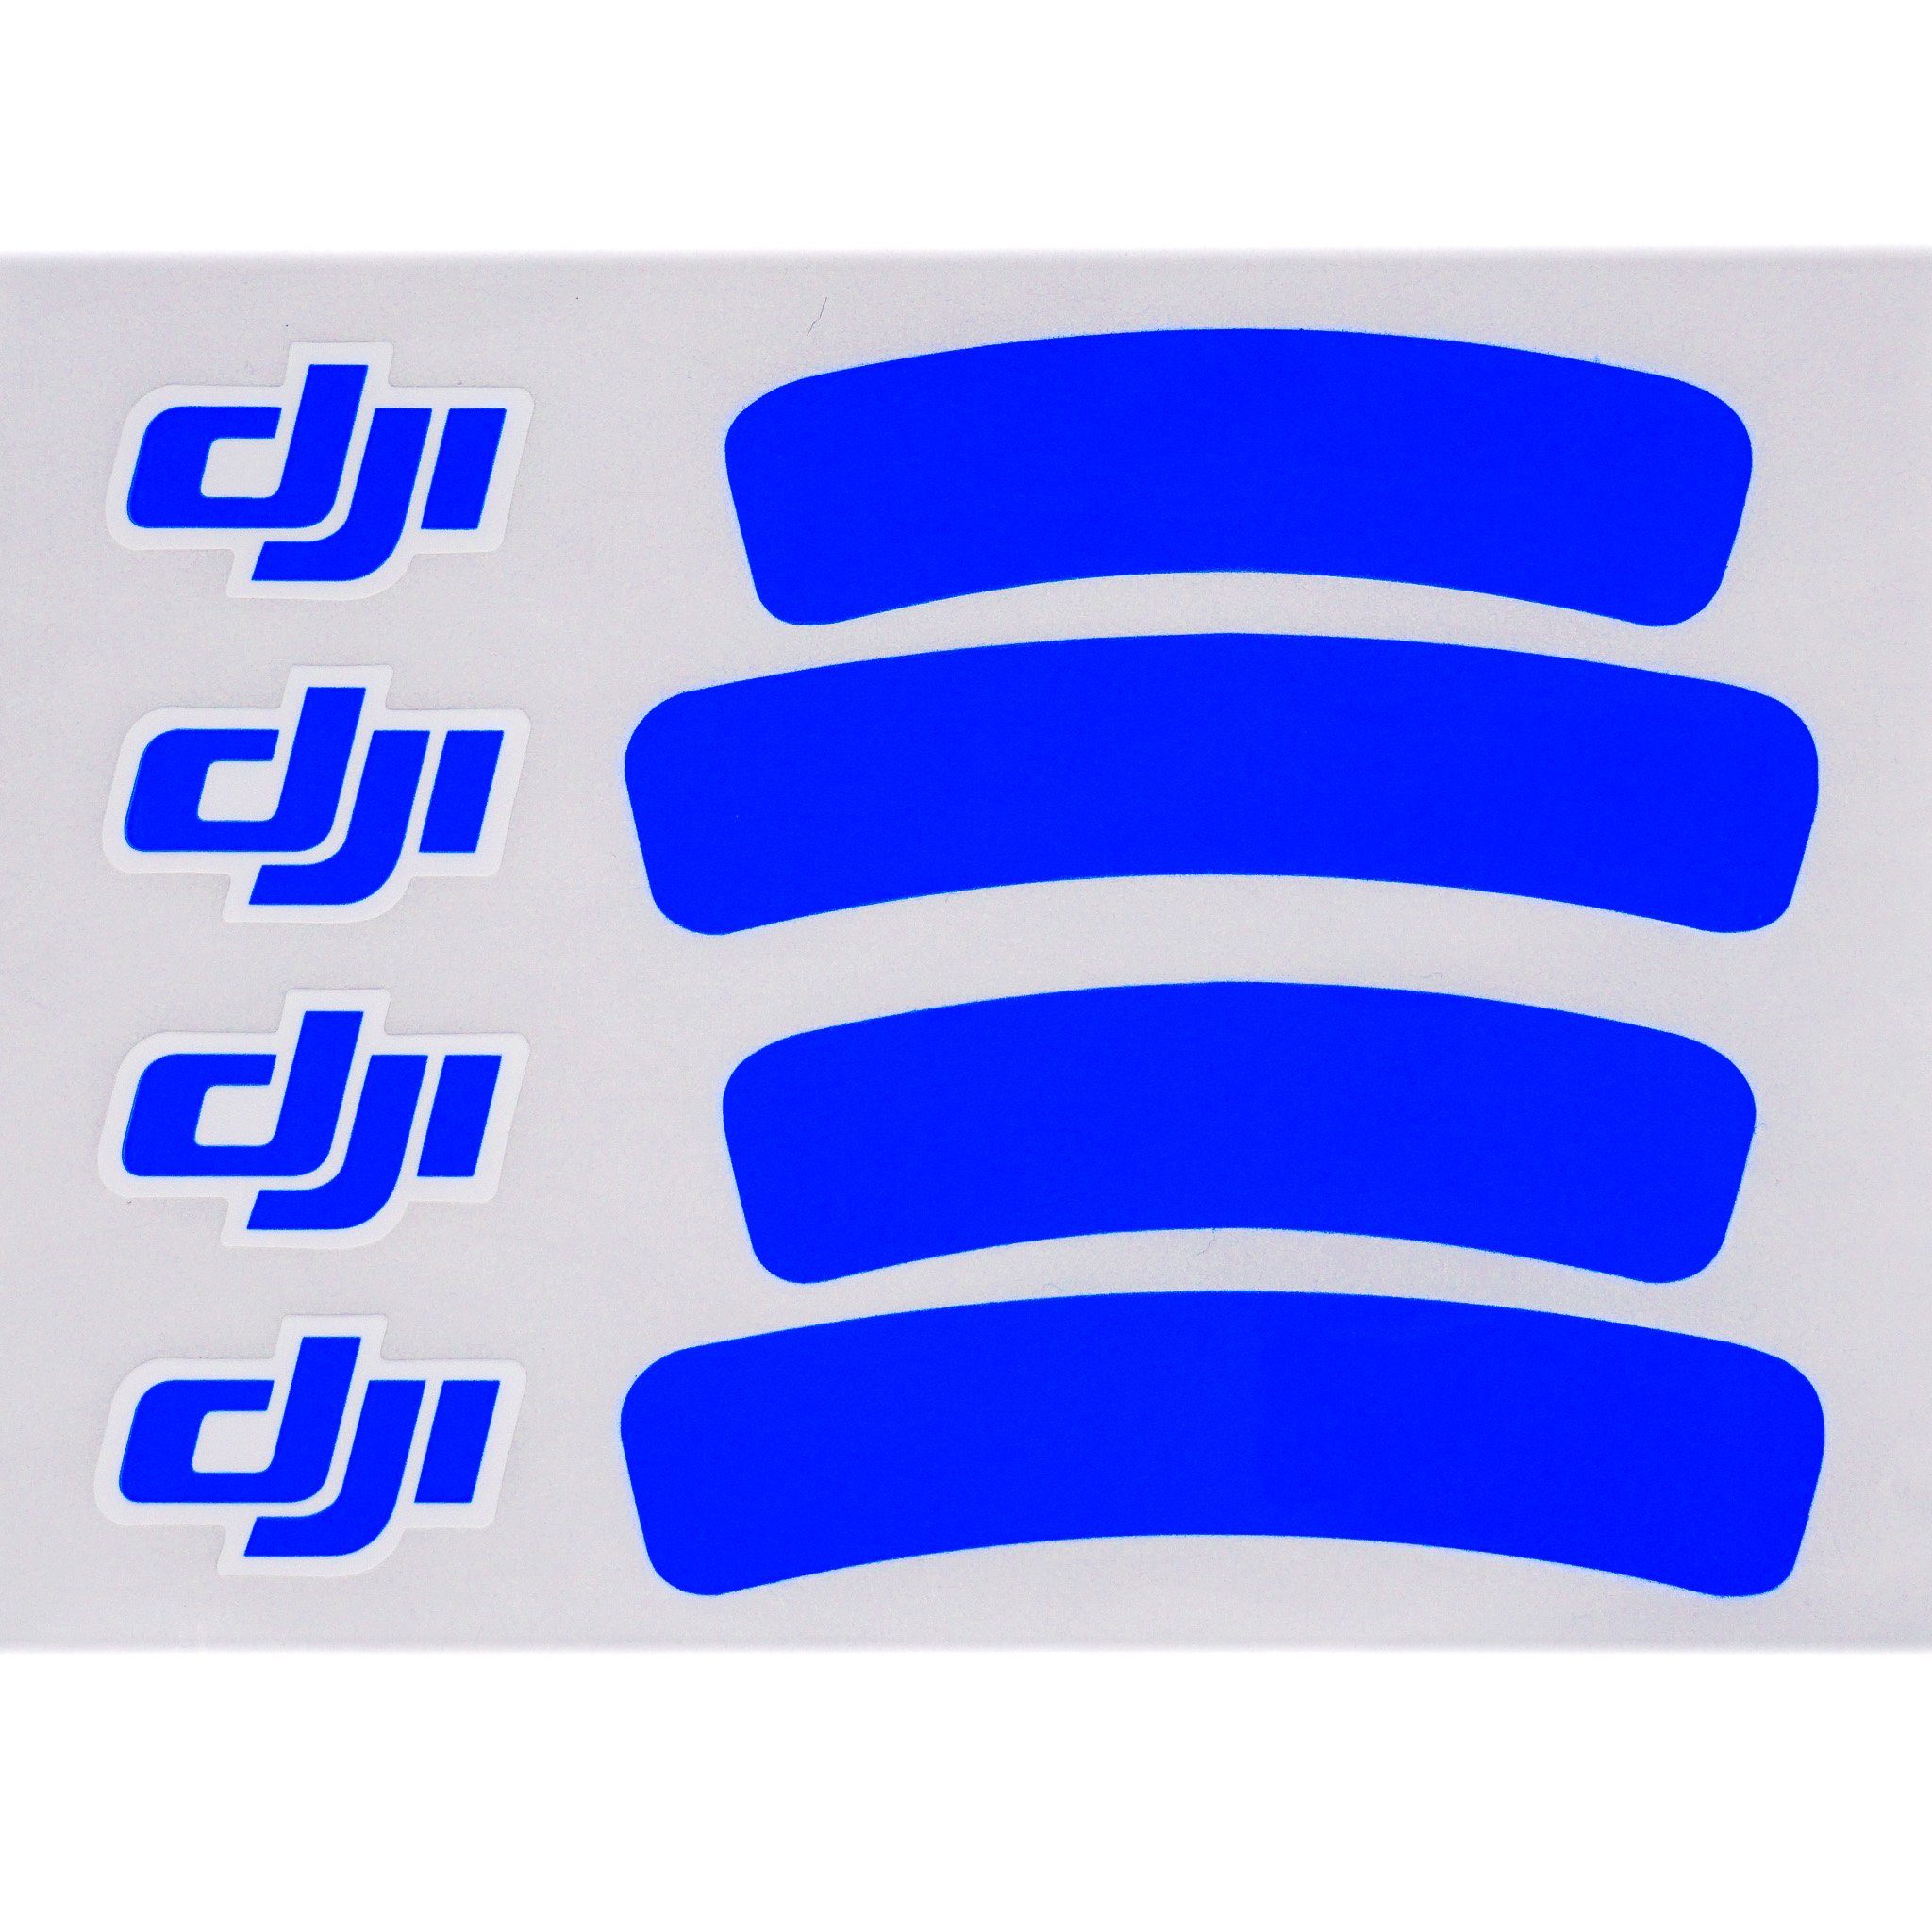 Drohne Sticker, 3 Sticker Original 2 Produkt) DJI Original (DJI, & Zubehör Logo blue DJI Blau Original Aufkleber DJI Phantom DJI